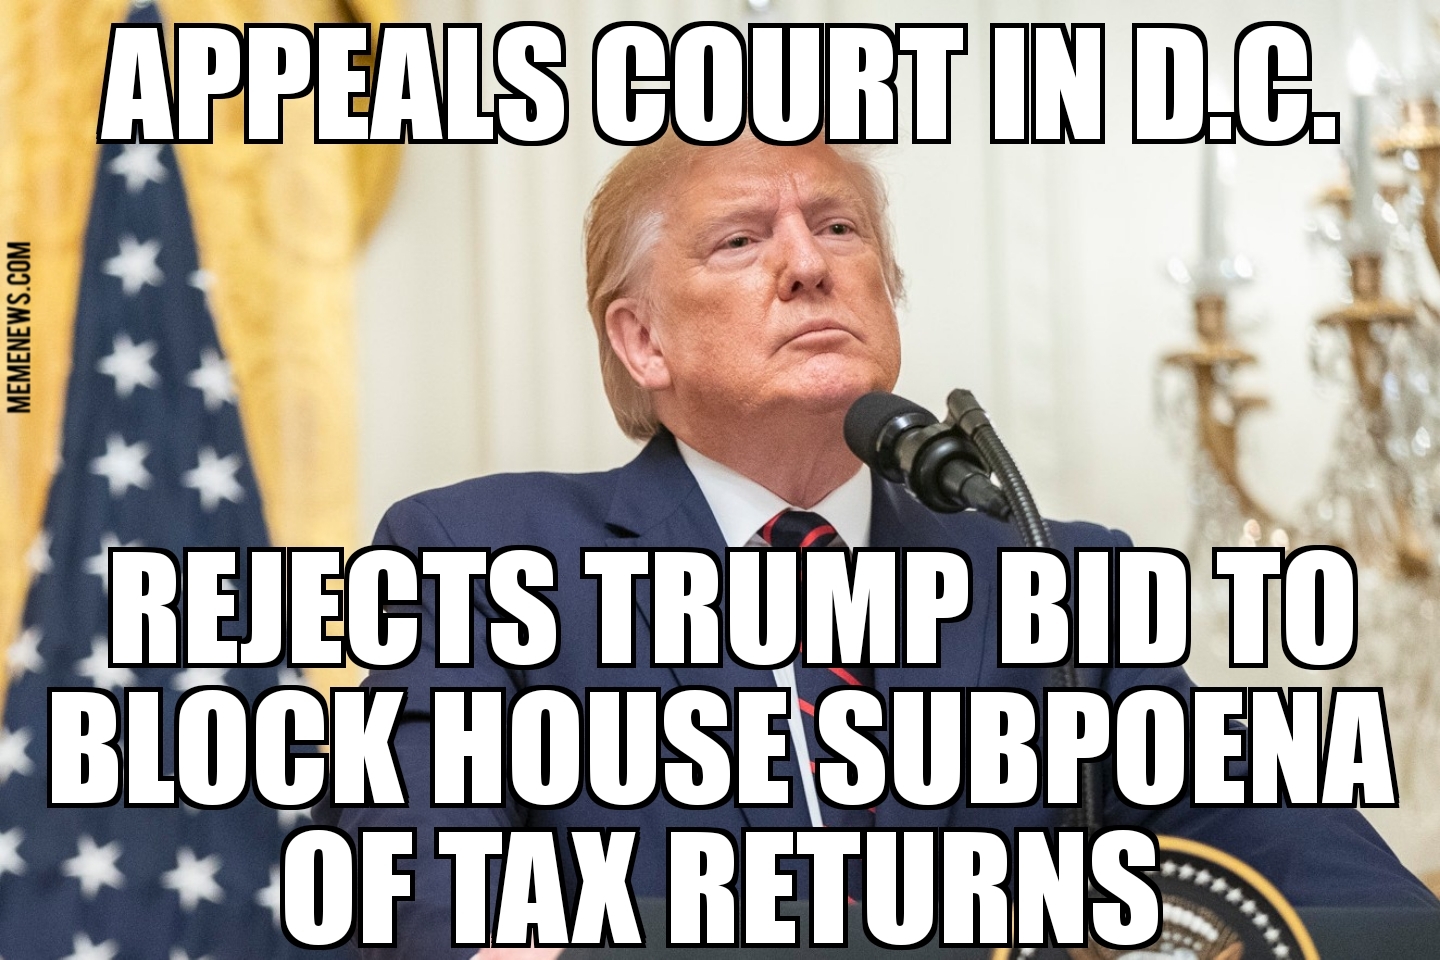 Appeals court rejects Trump bid to block House subpoena of tax returns